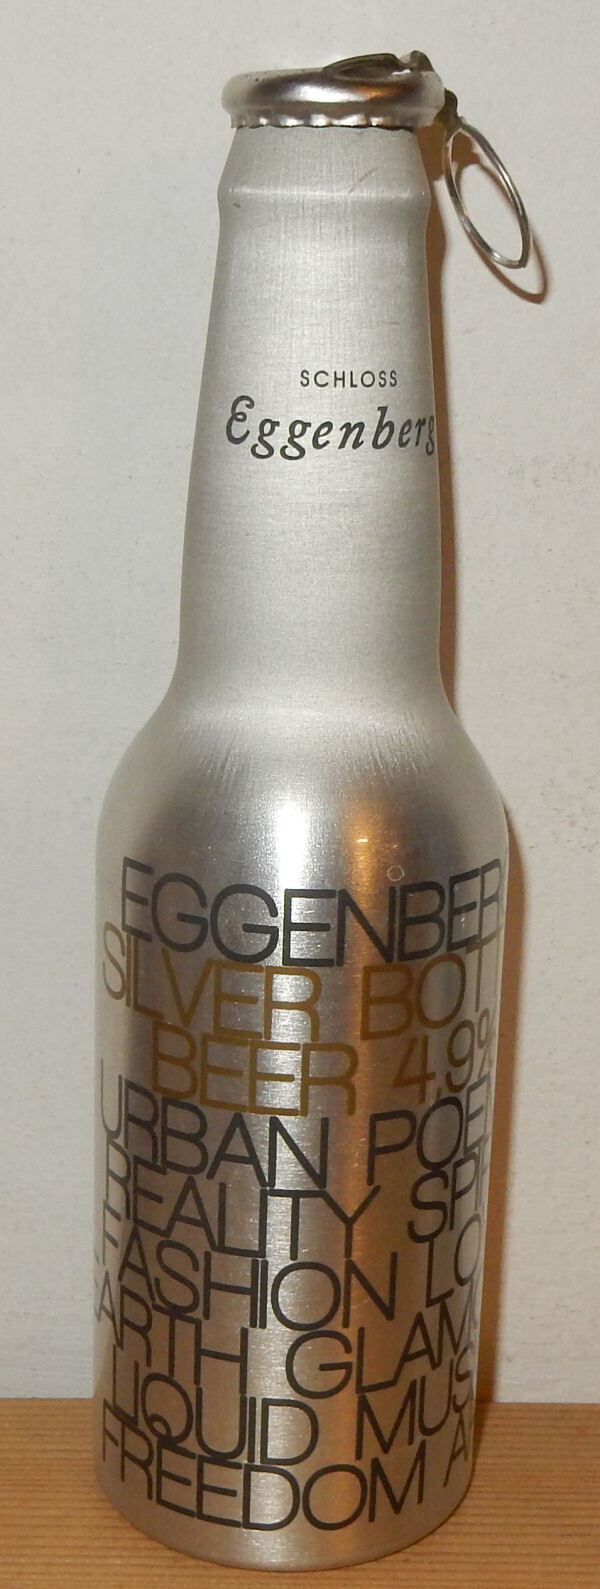 Eggenberg Aluminium Bottle Can From Austria (33cl) Empty !!